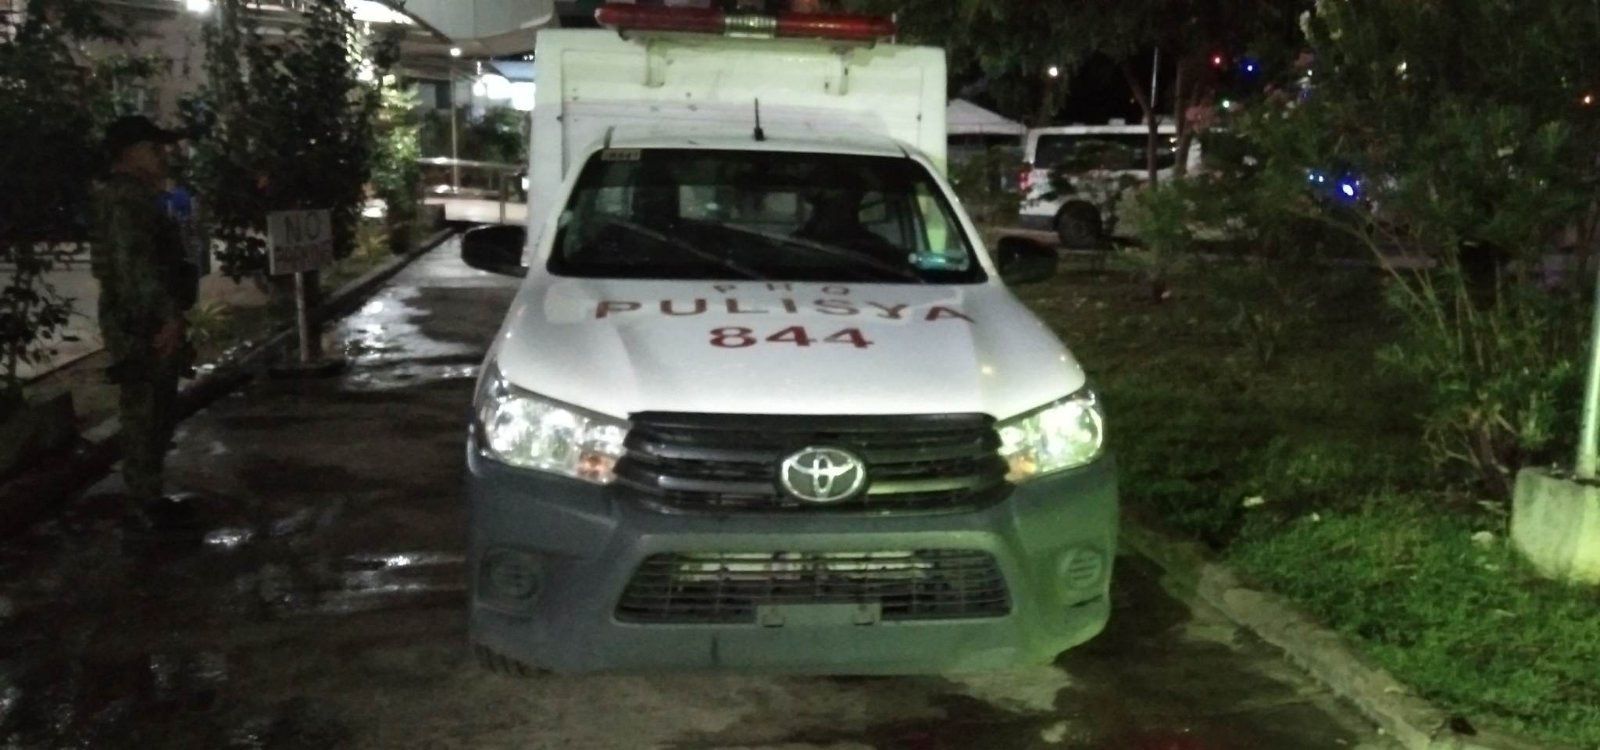 PNP vows justice for 2 cops killed in Maguindanao del Sur ambush ...